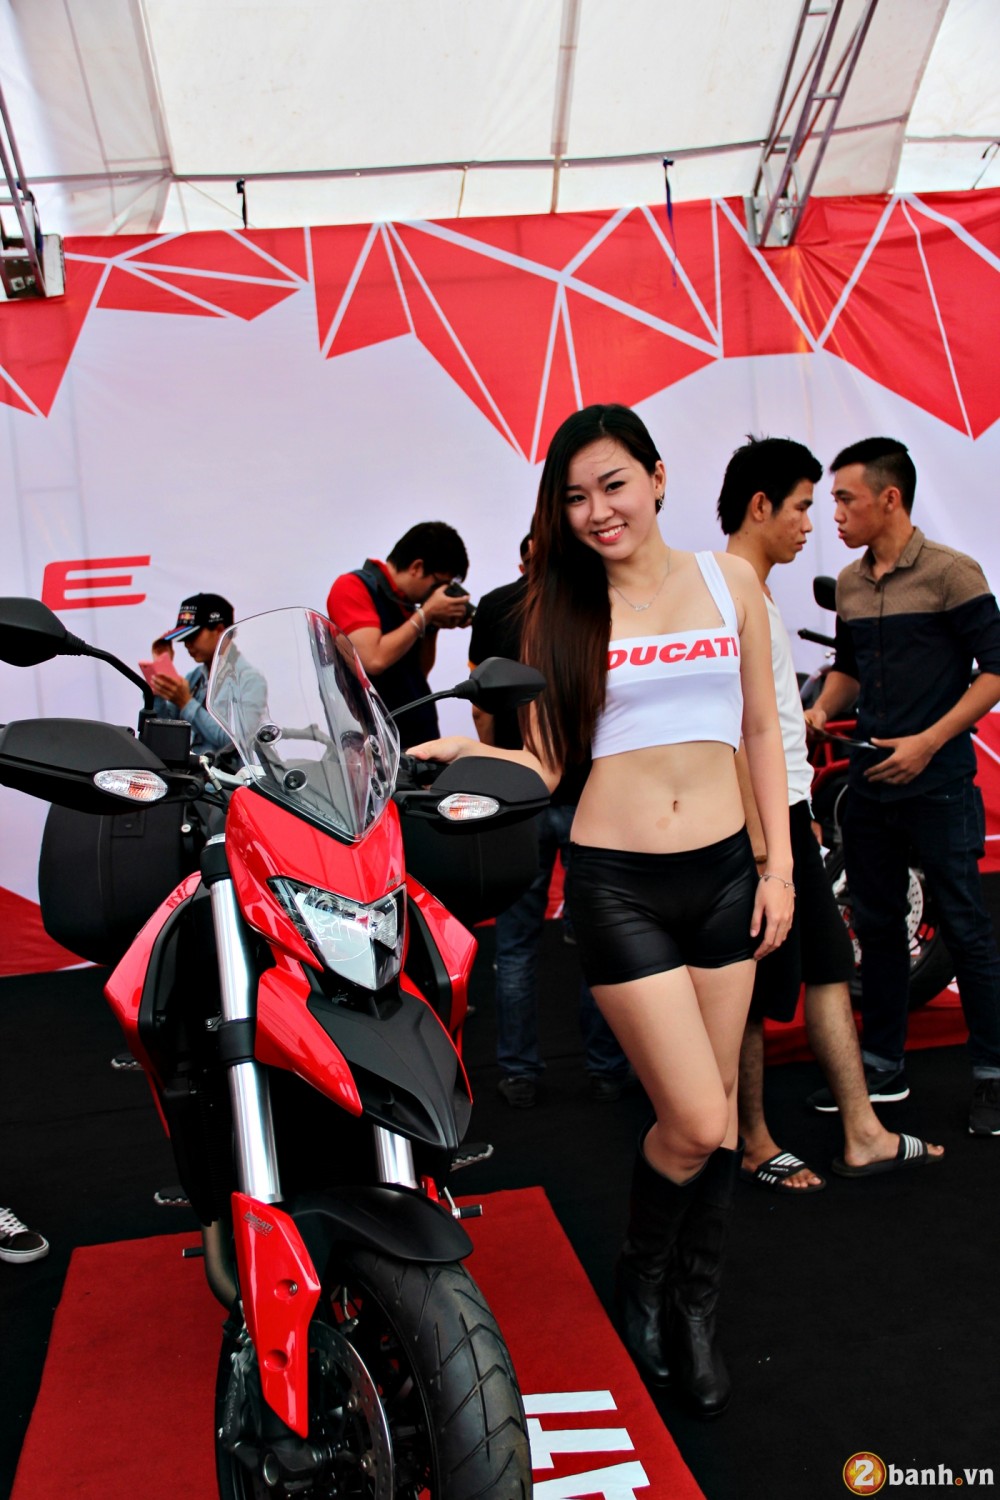 Le Hoi Viet Nam MotorBike Festival 2014 - 7